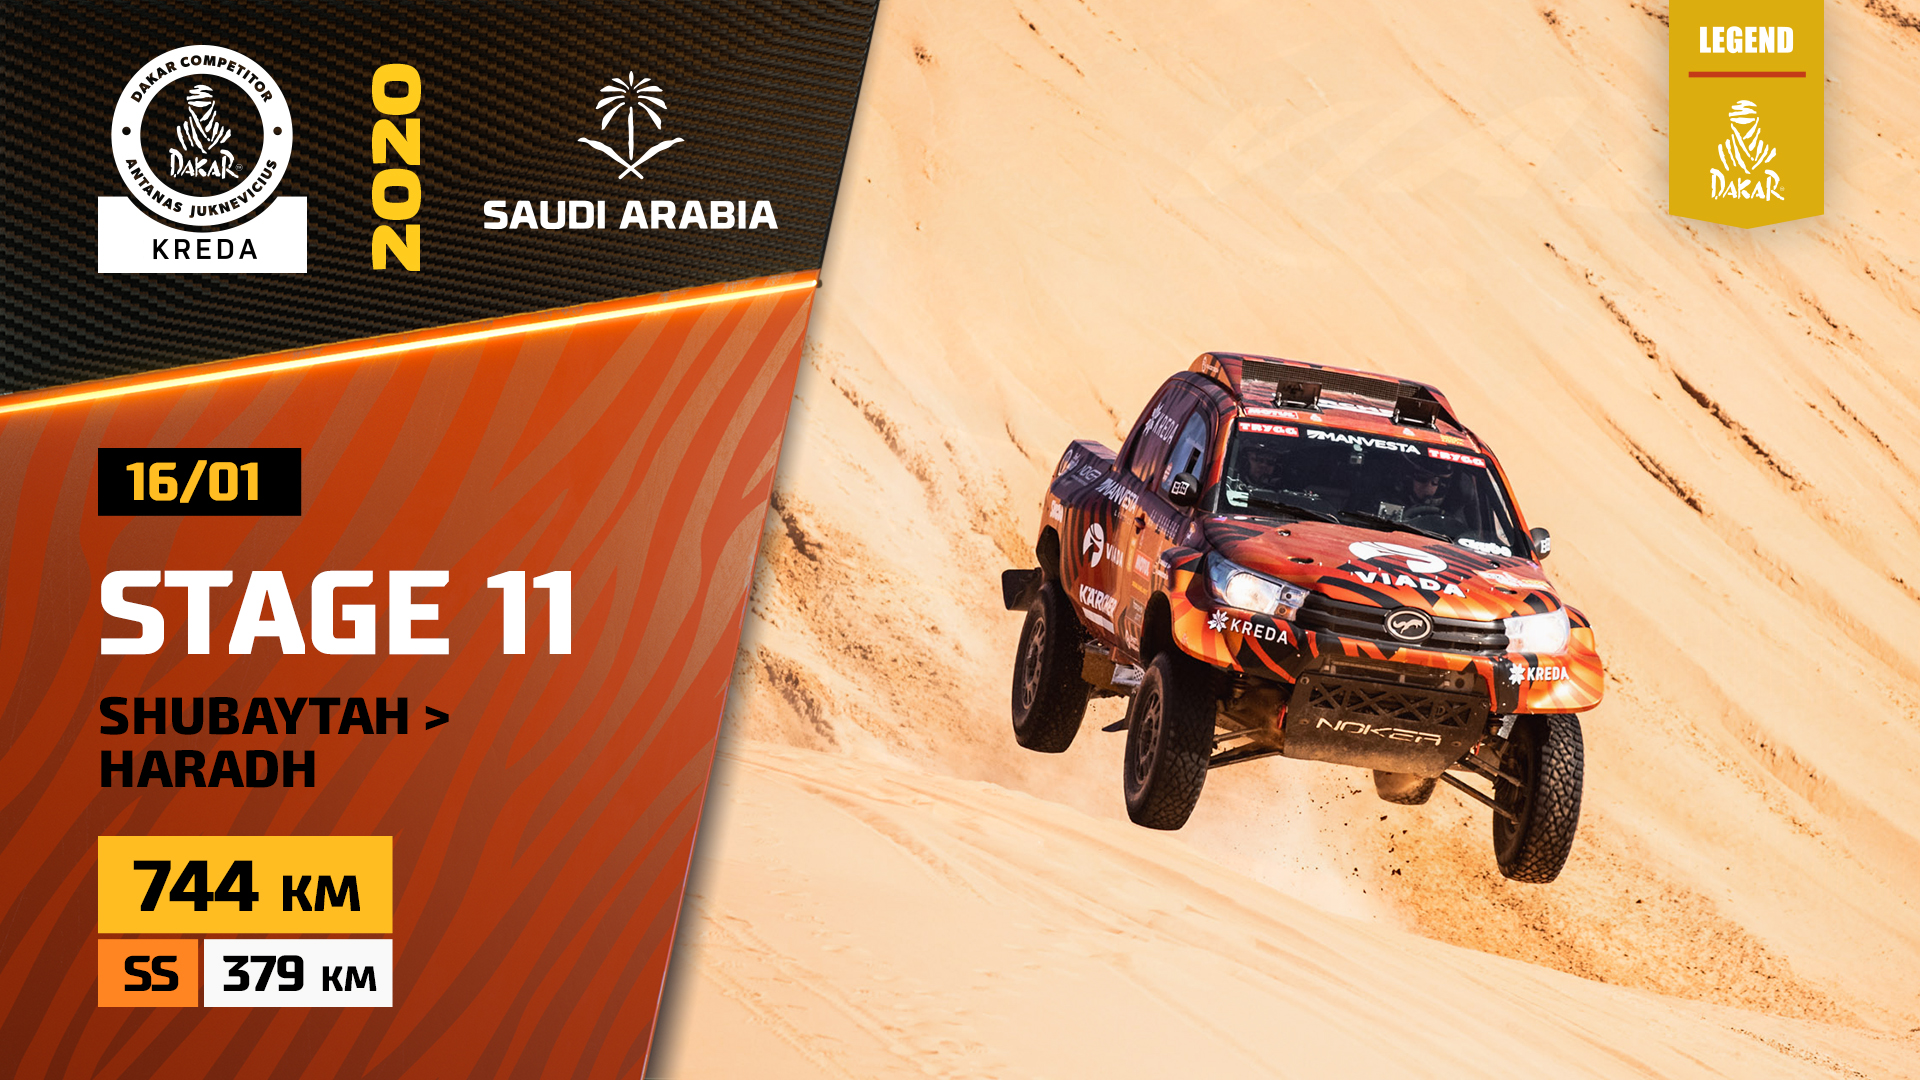 Dakar Rally 2020. Stage 11 Highlights Shubaytah – Haradh in Saudi Arabia